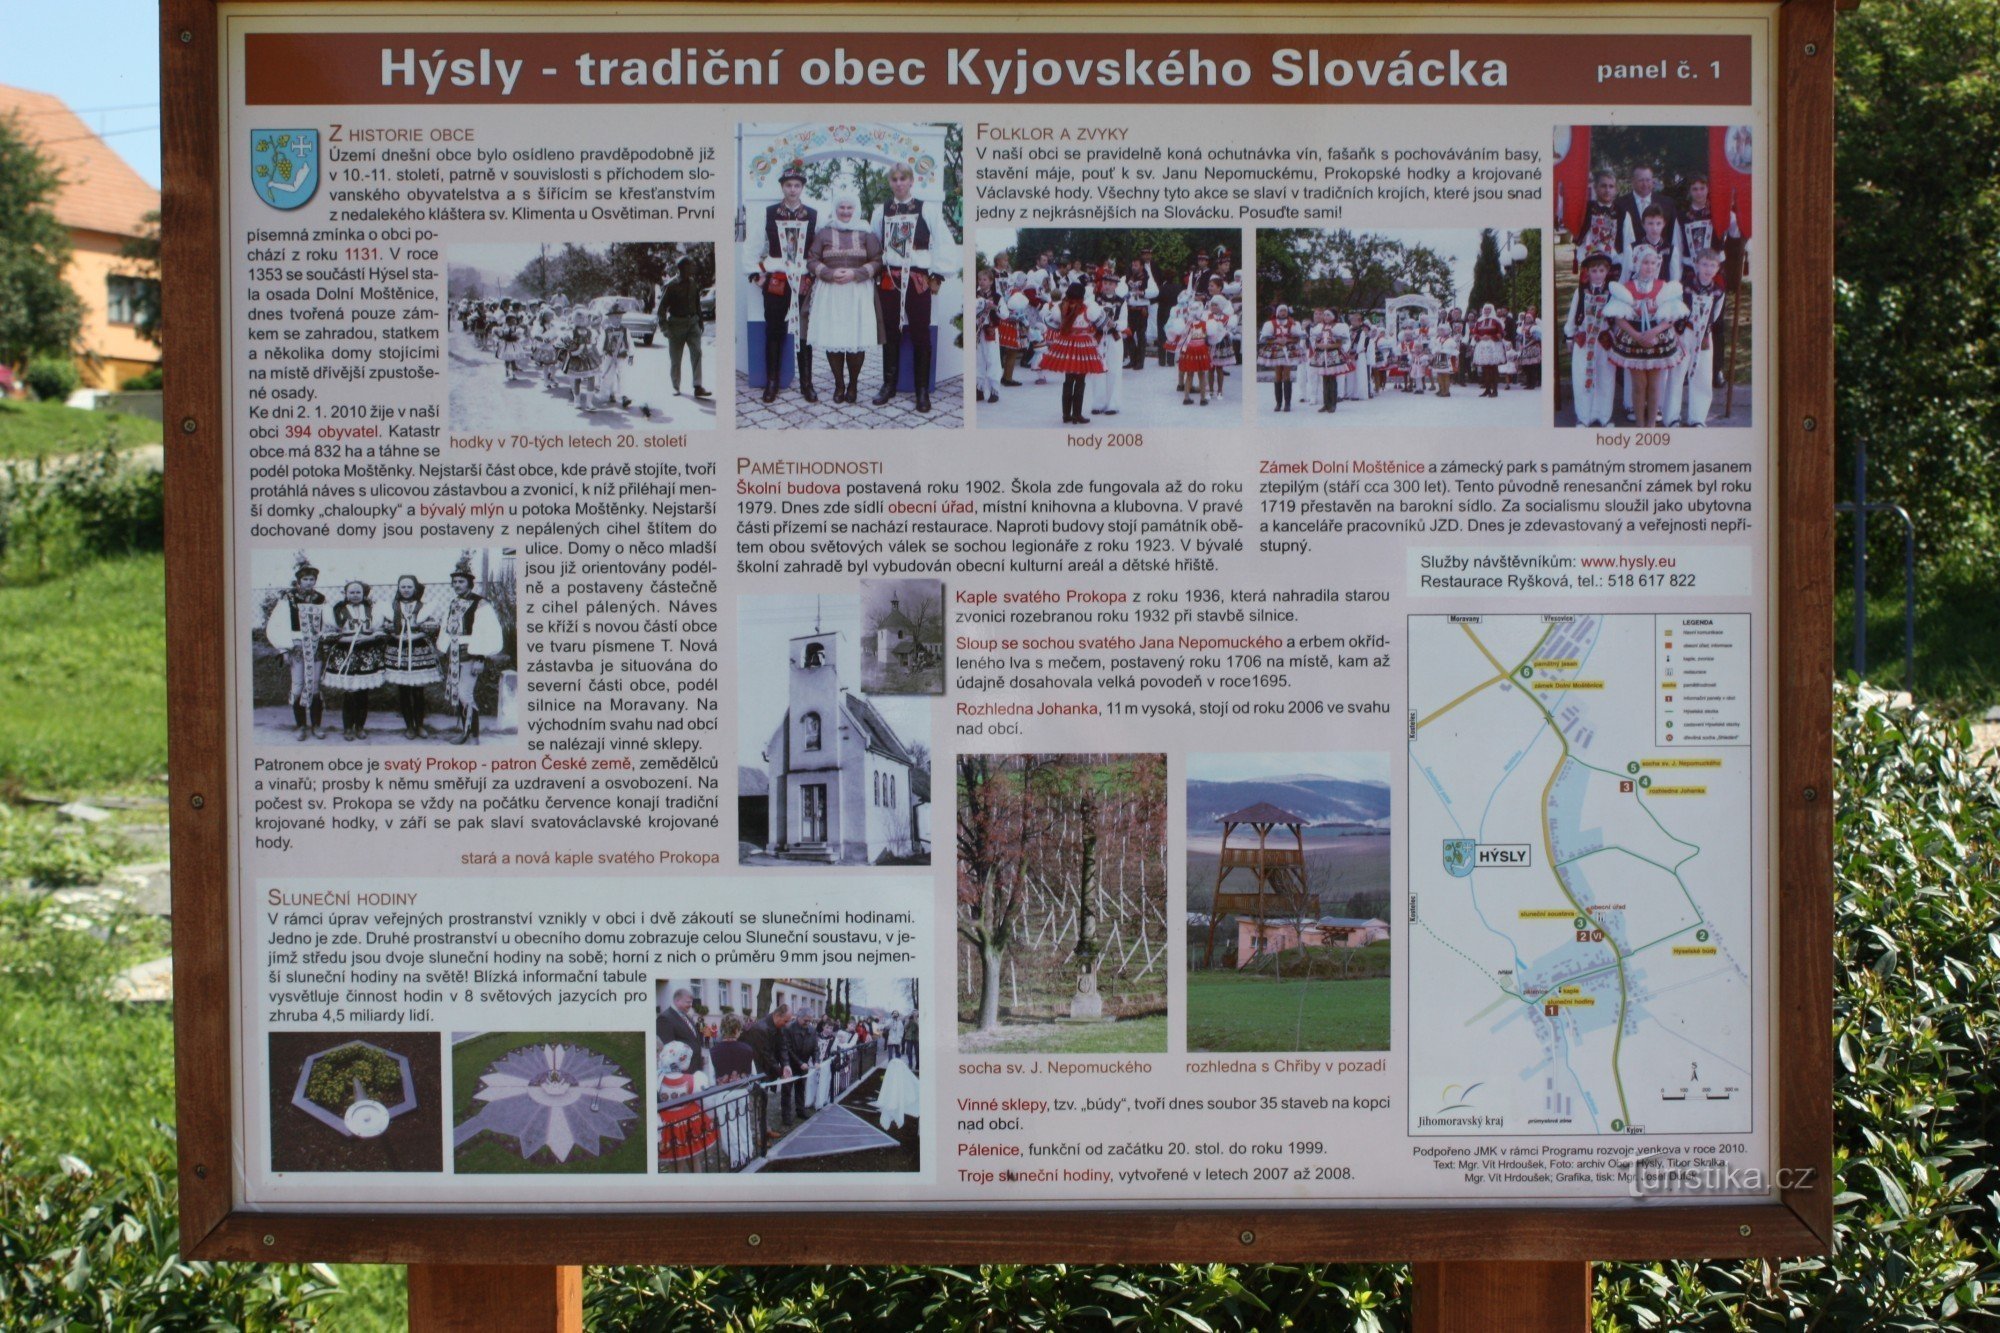 Hýsly, das touristisch interessante Dorf Slovácka